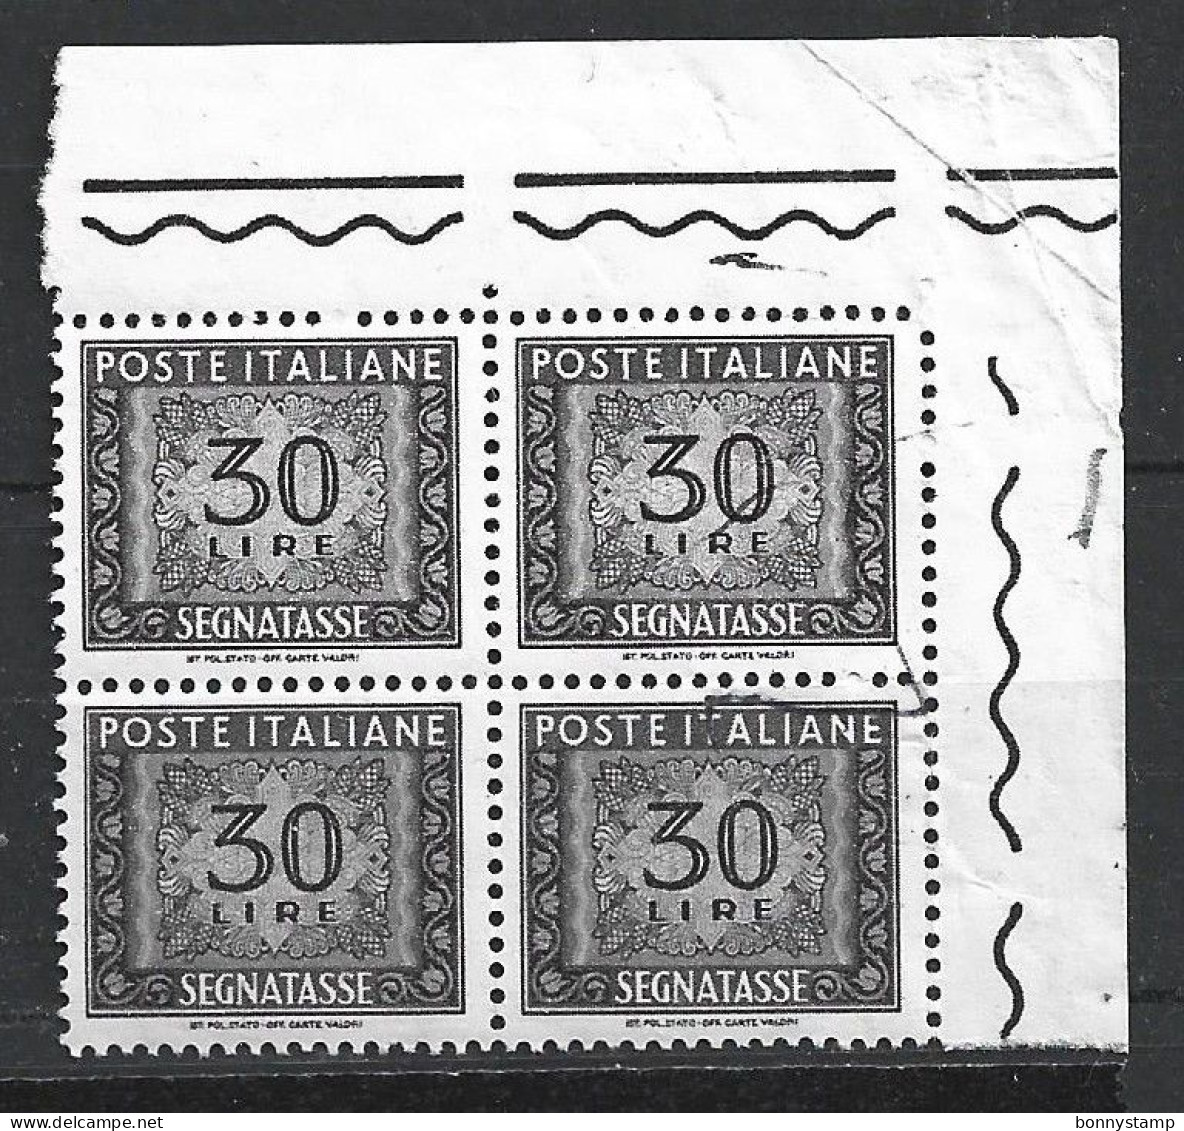 Repubblica Italiana, 1955/66 - 30 Lire Segnatasse, Fil. Stelle, Quartina - Nr.116 MNH** - Taxe